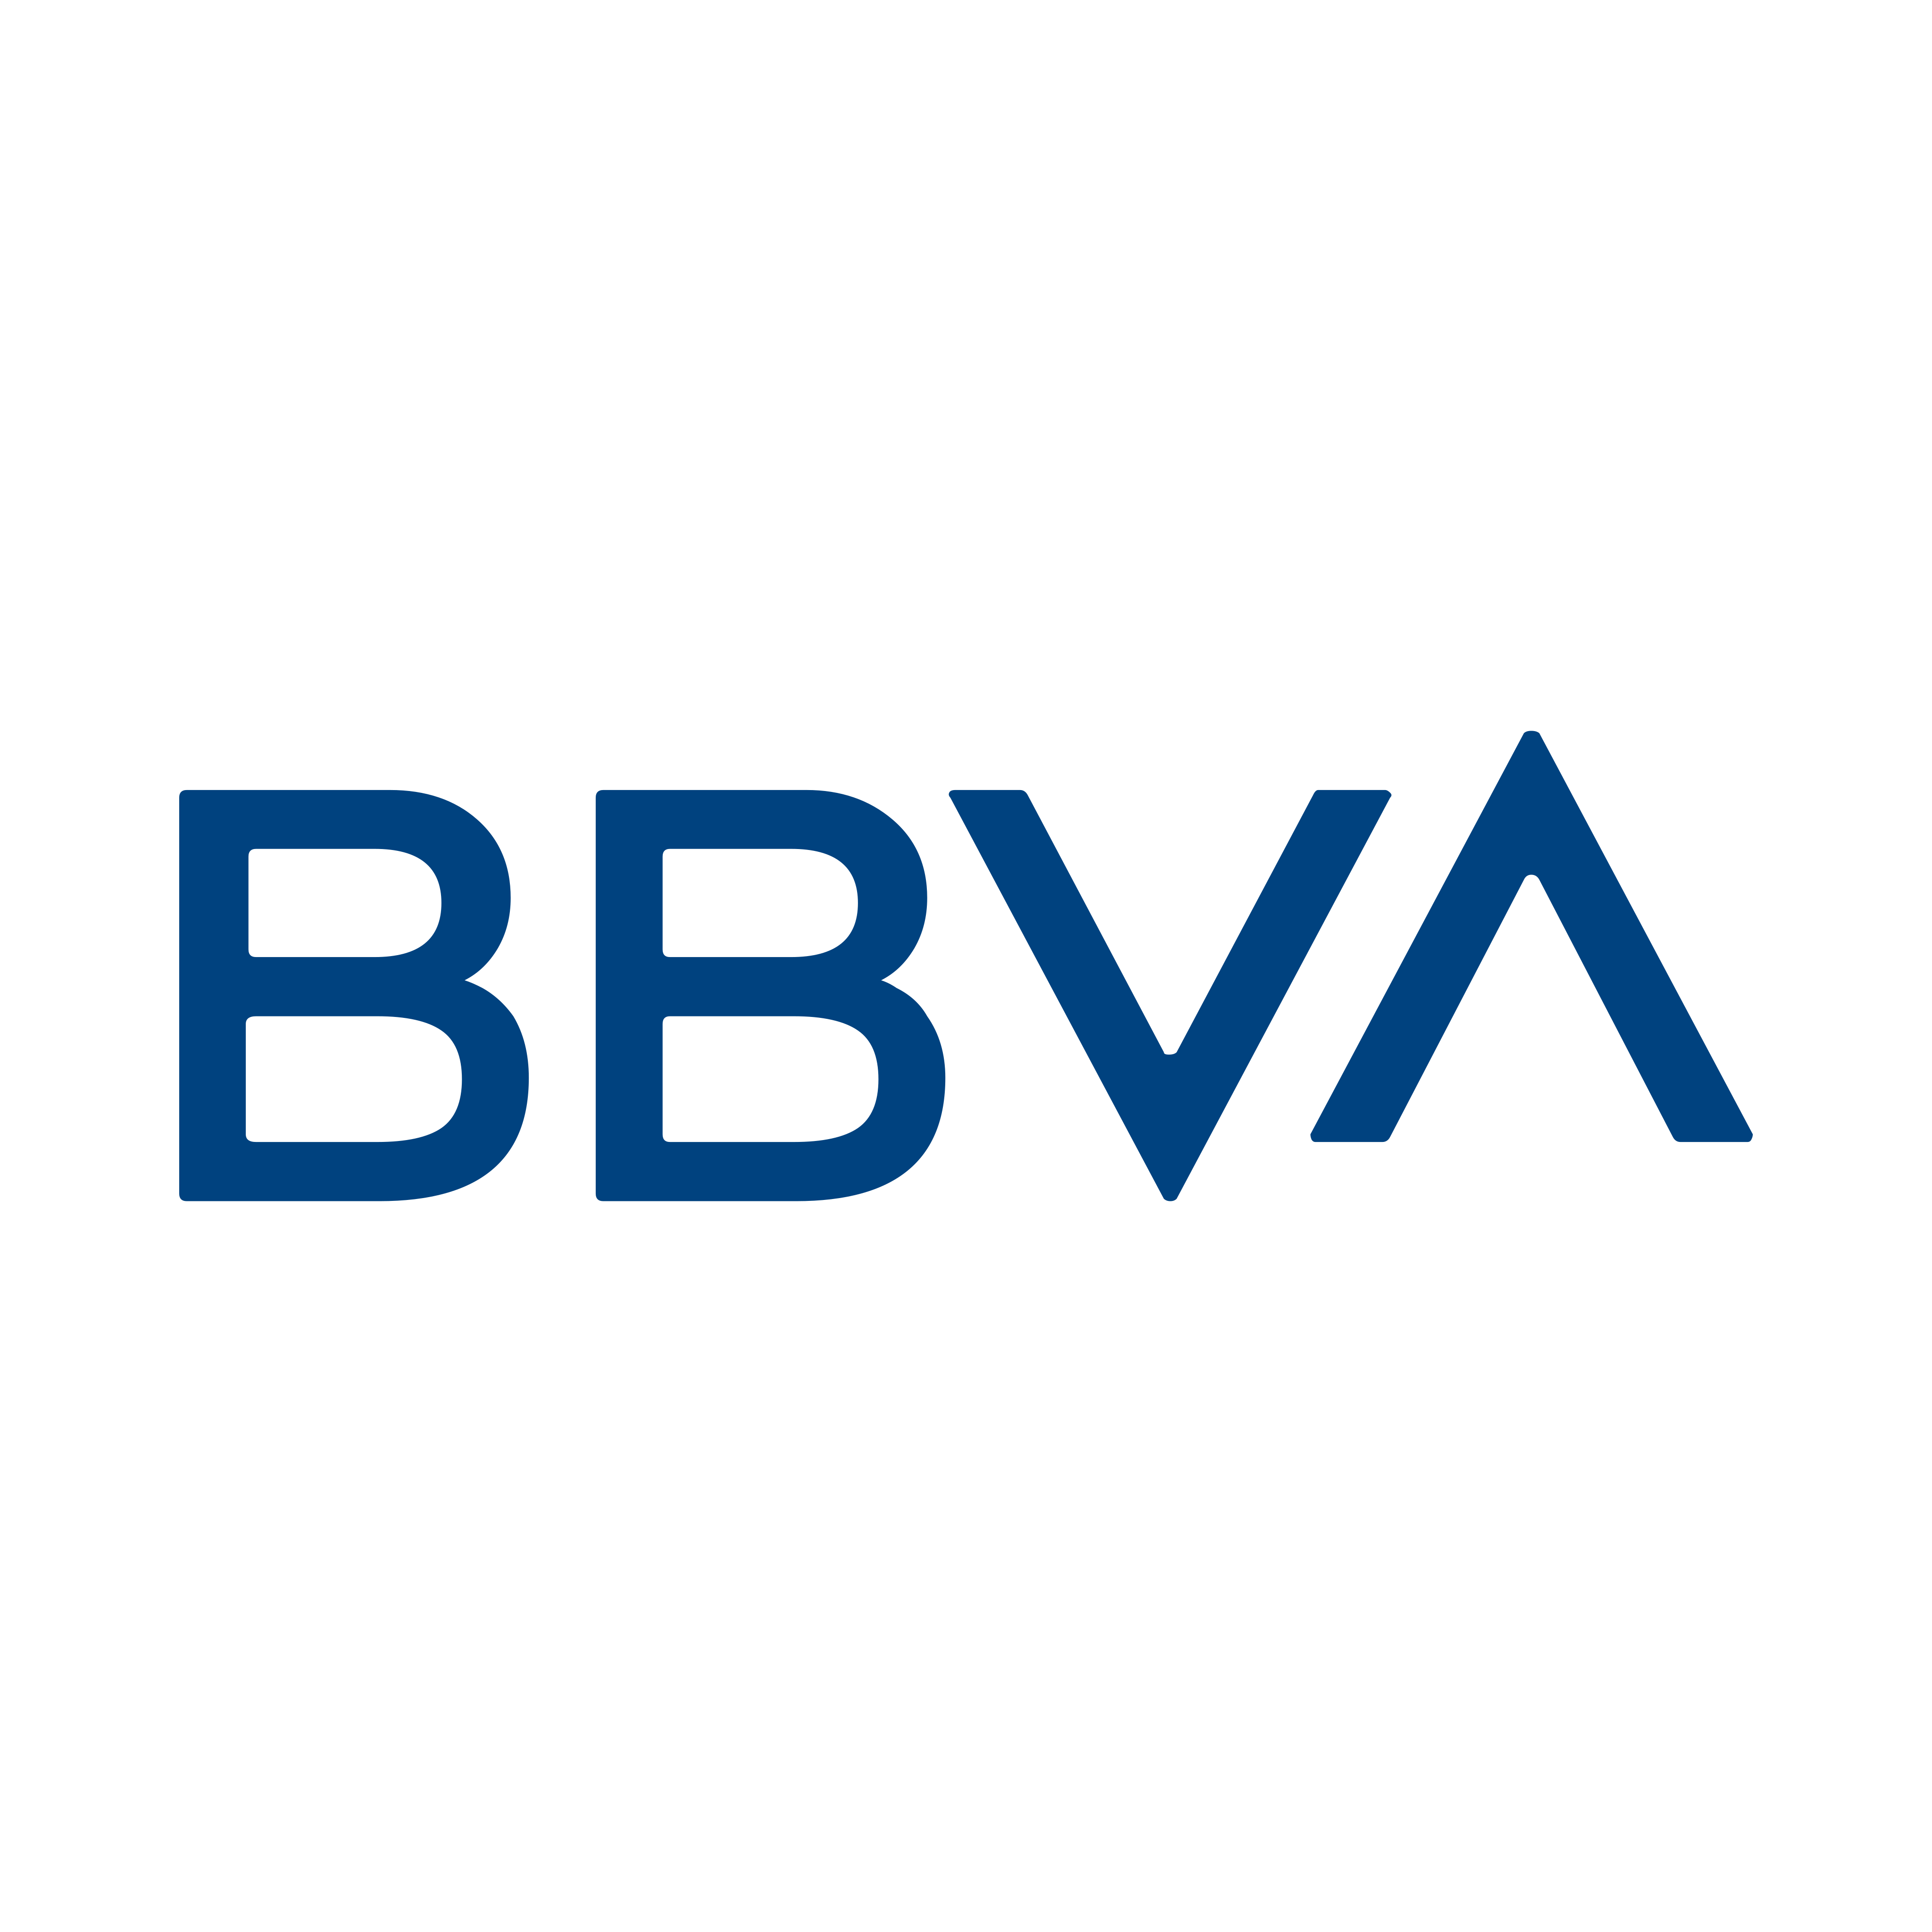 bbva logo 0 - BBVA Logo